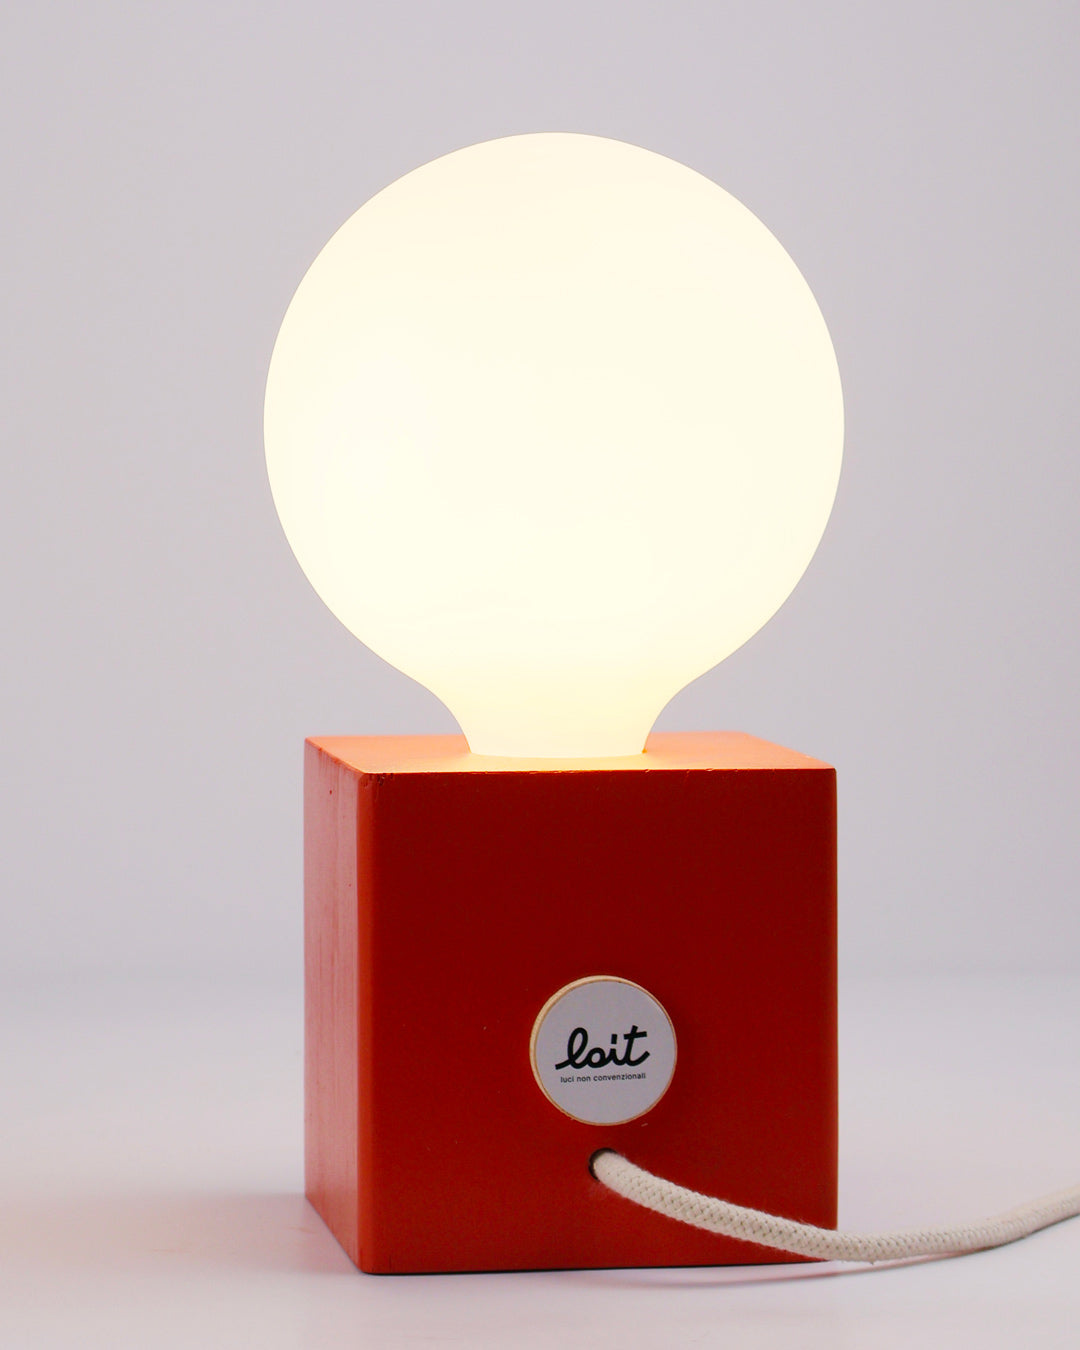 Lait luce handmade lamp